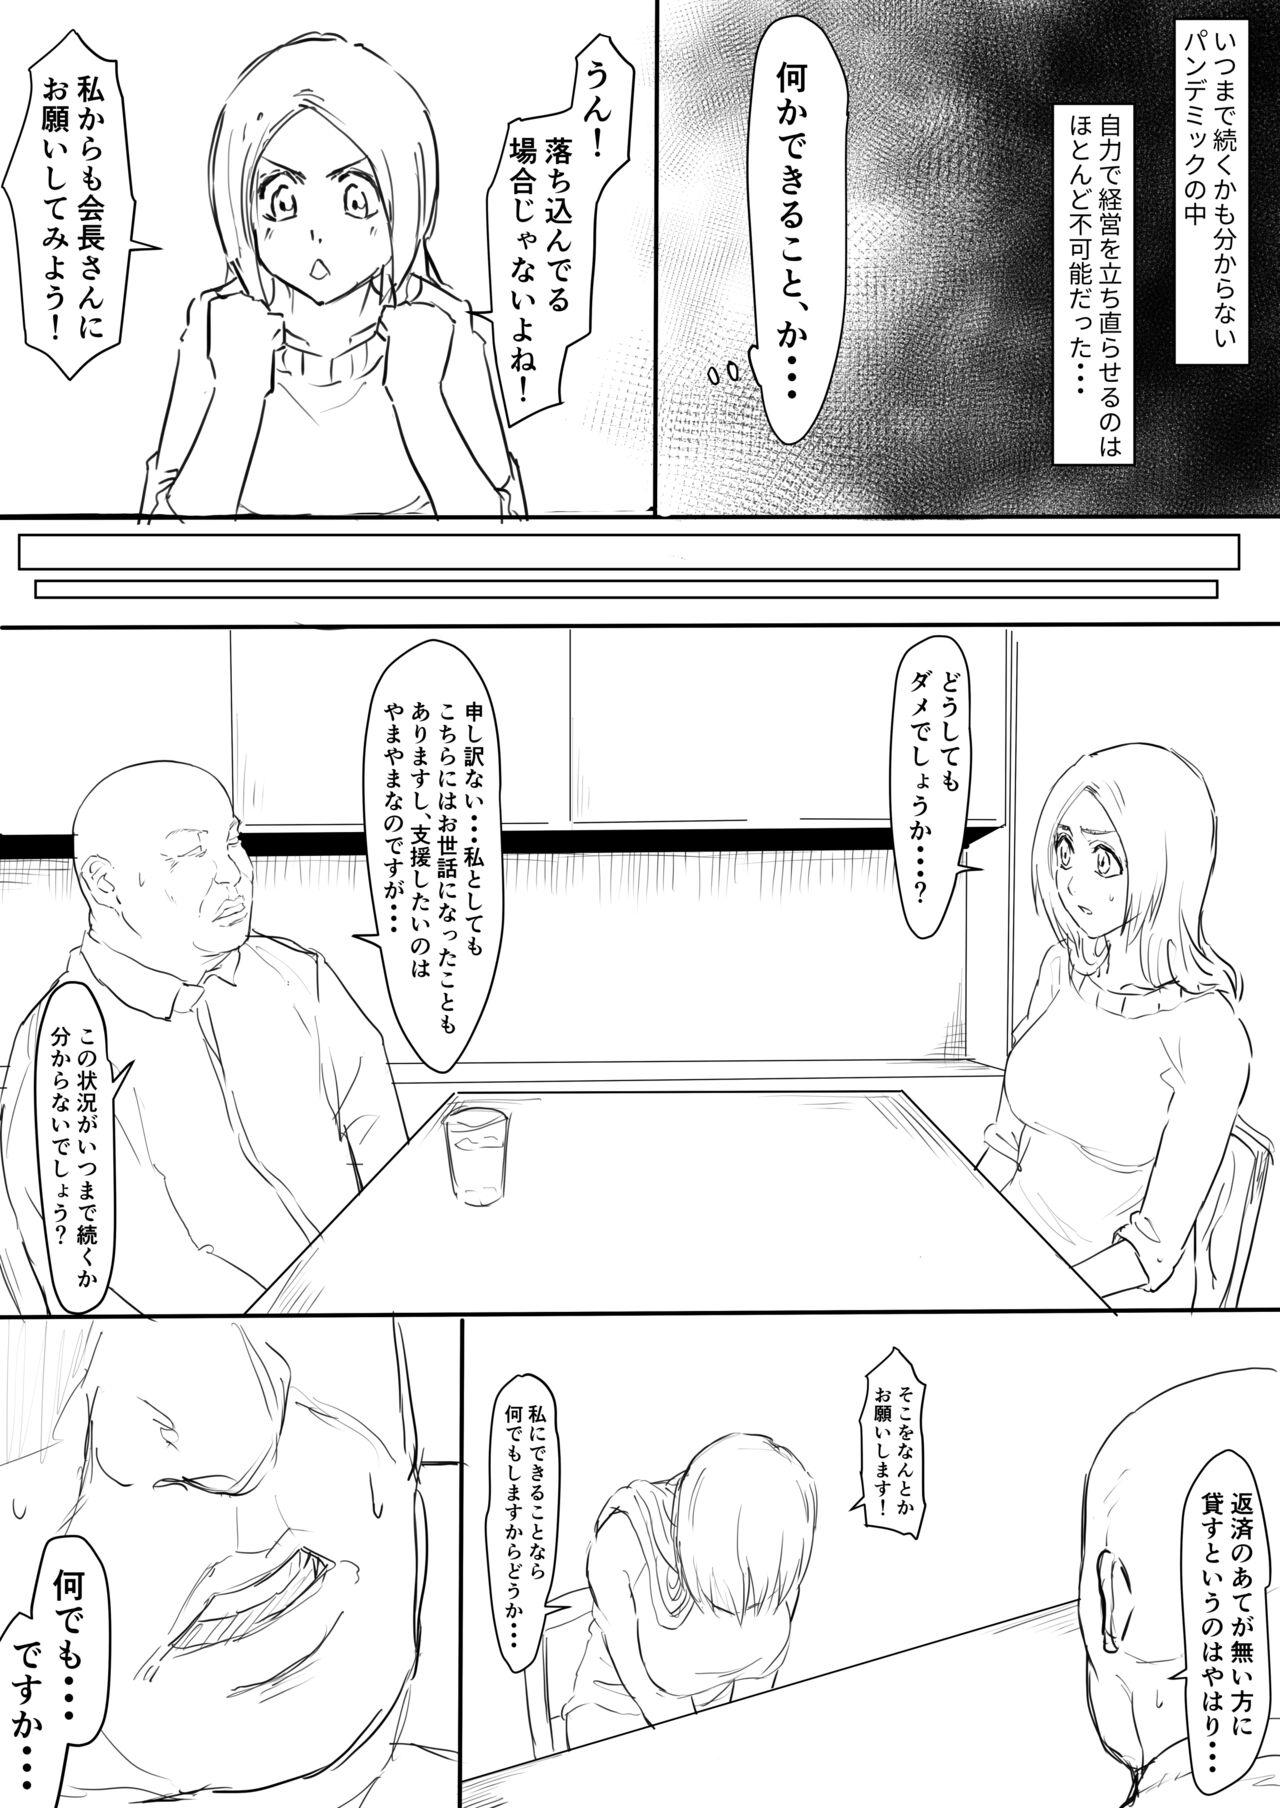 Bdsm Orihime Manga - Bleach Shoplifter - Page 2